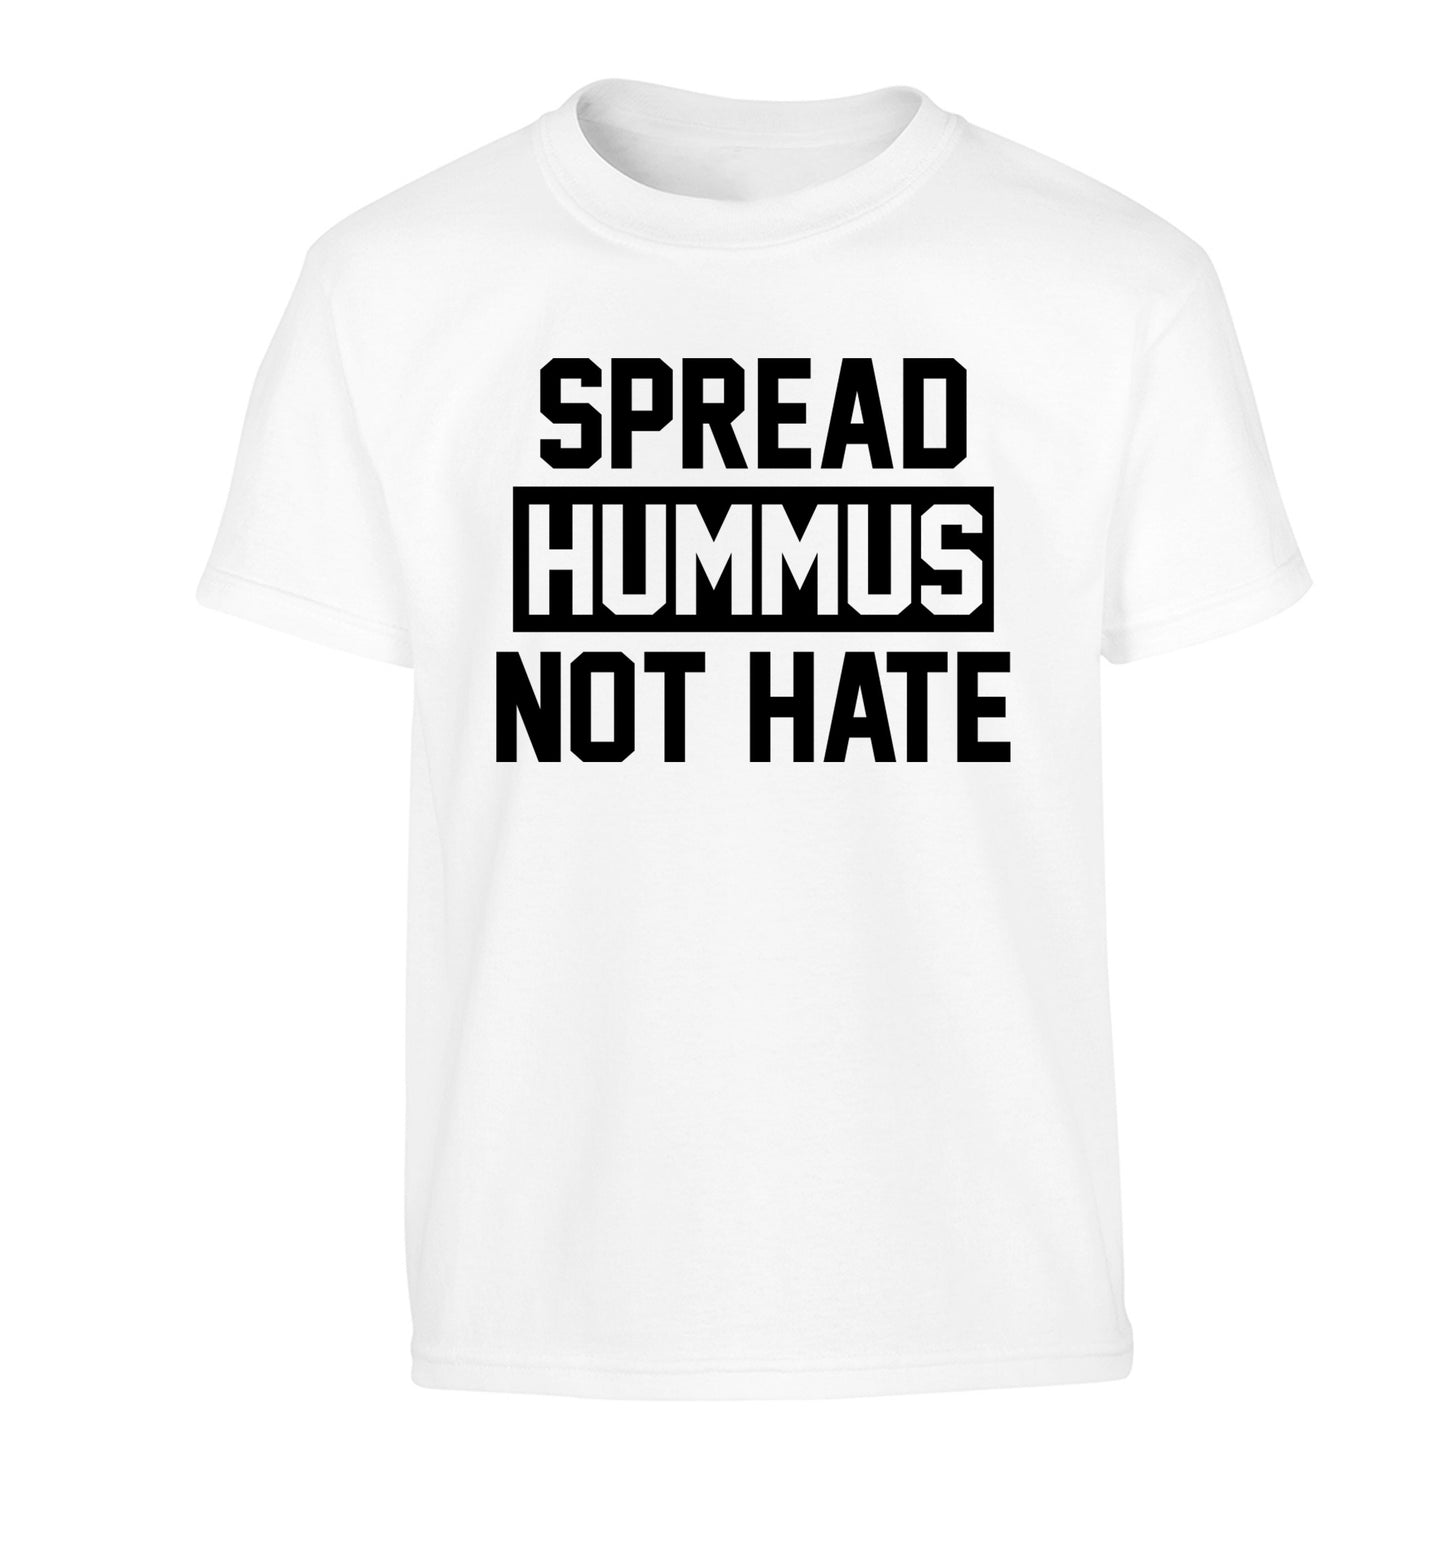 Spread hummus not hate Children's white Tshirt 12-14 Years